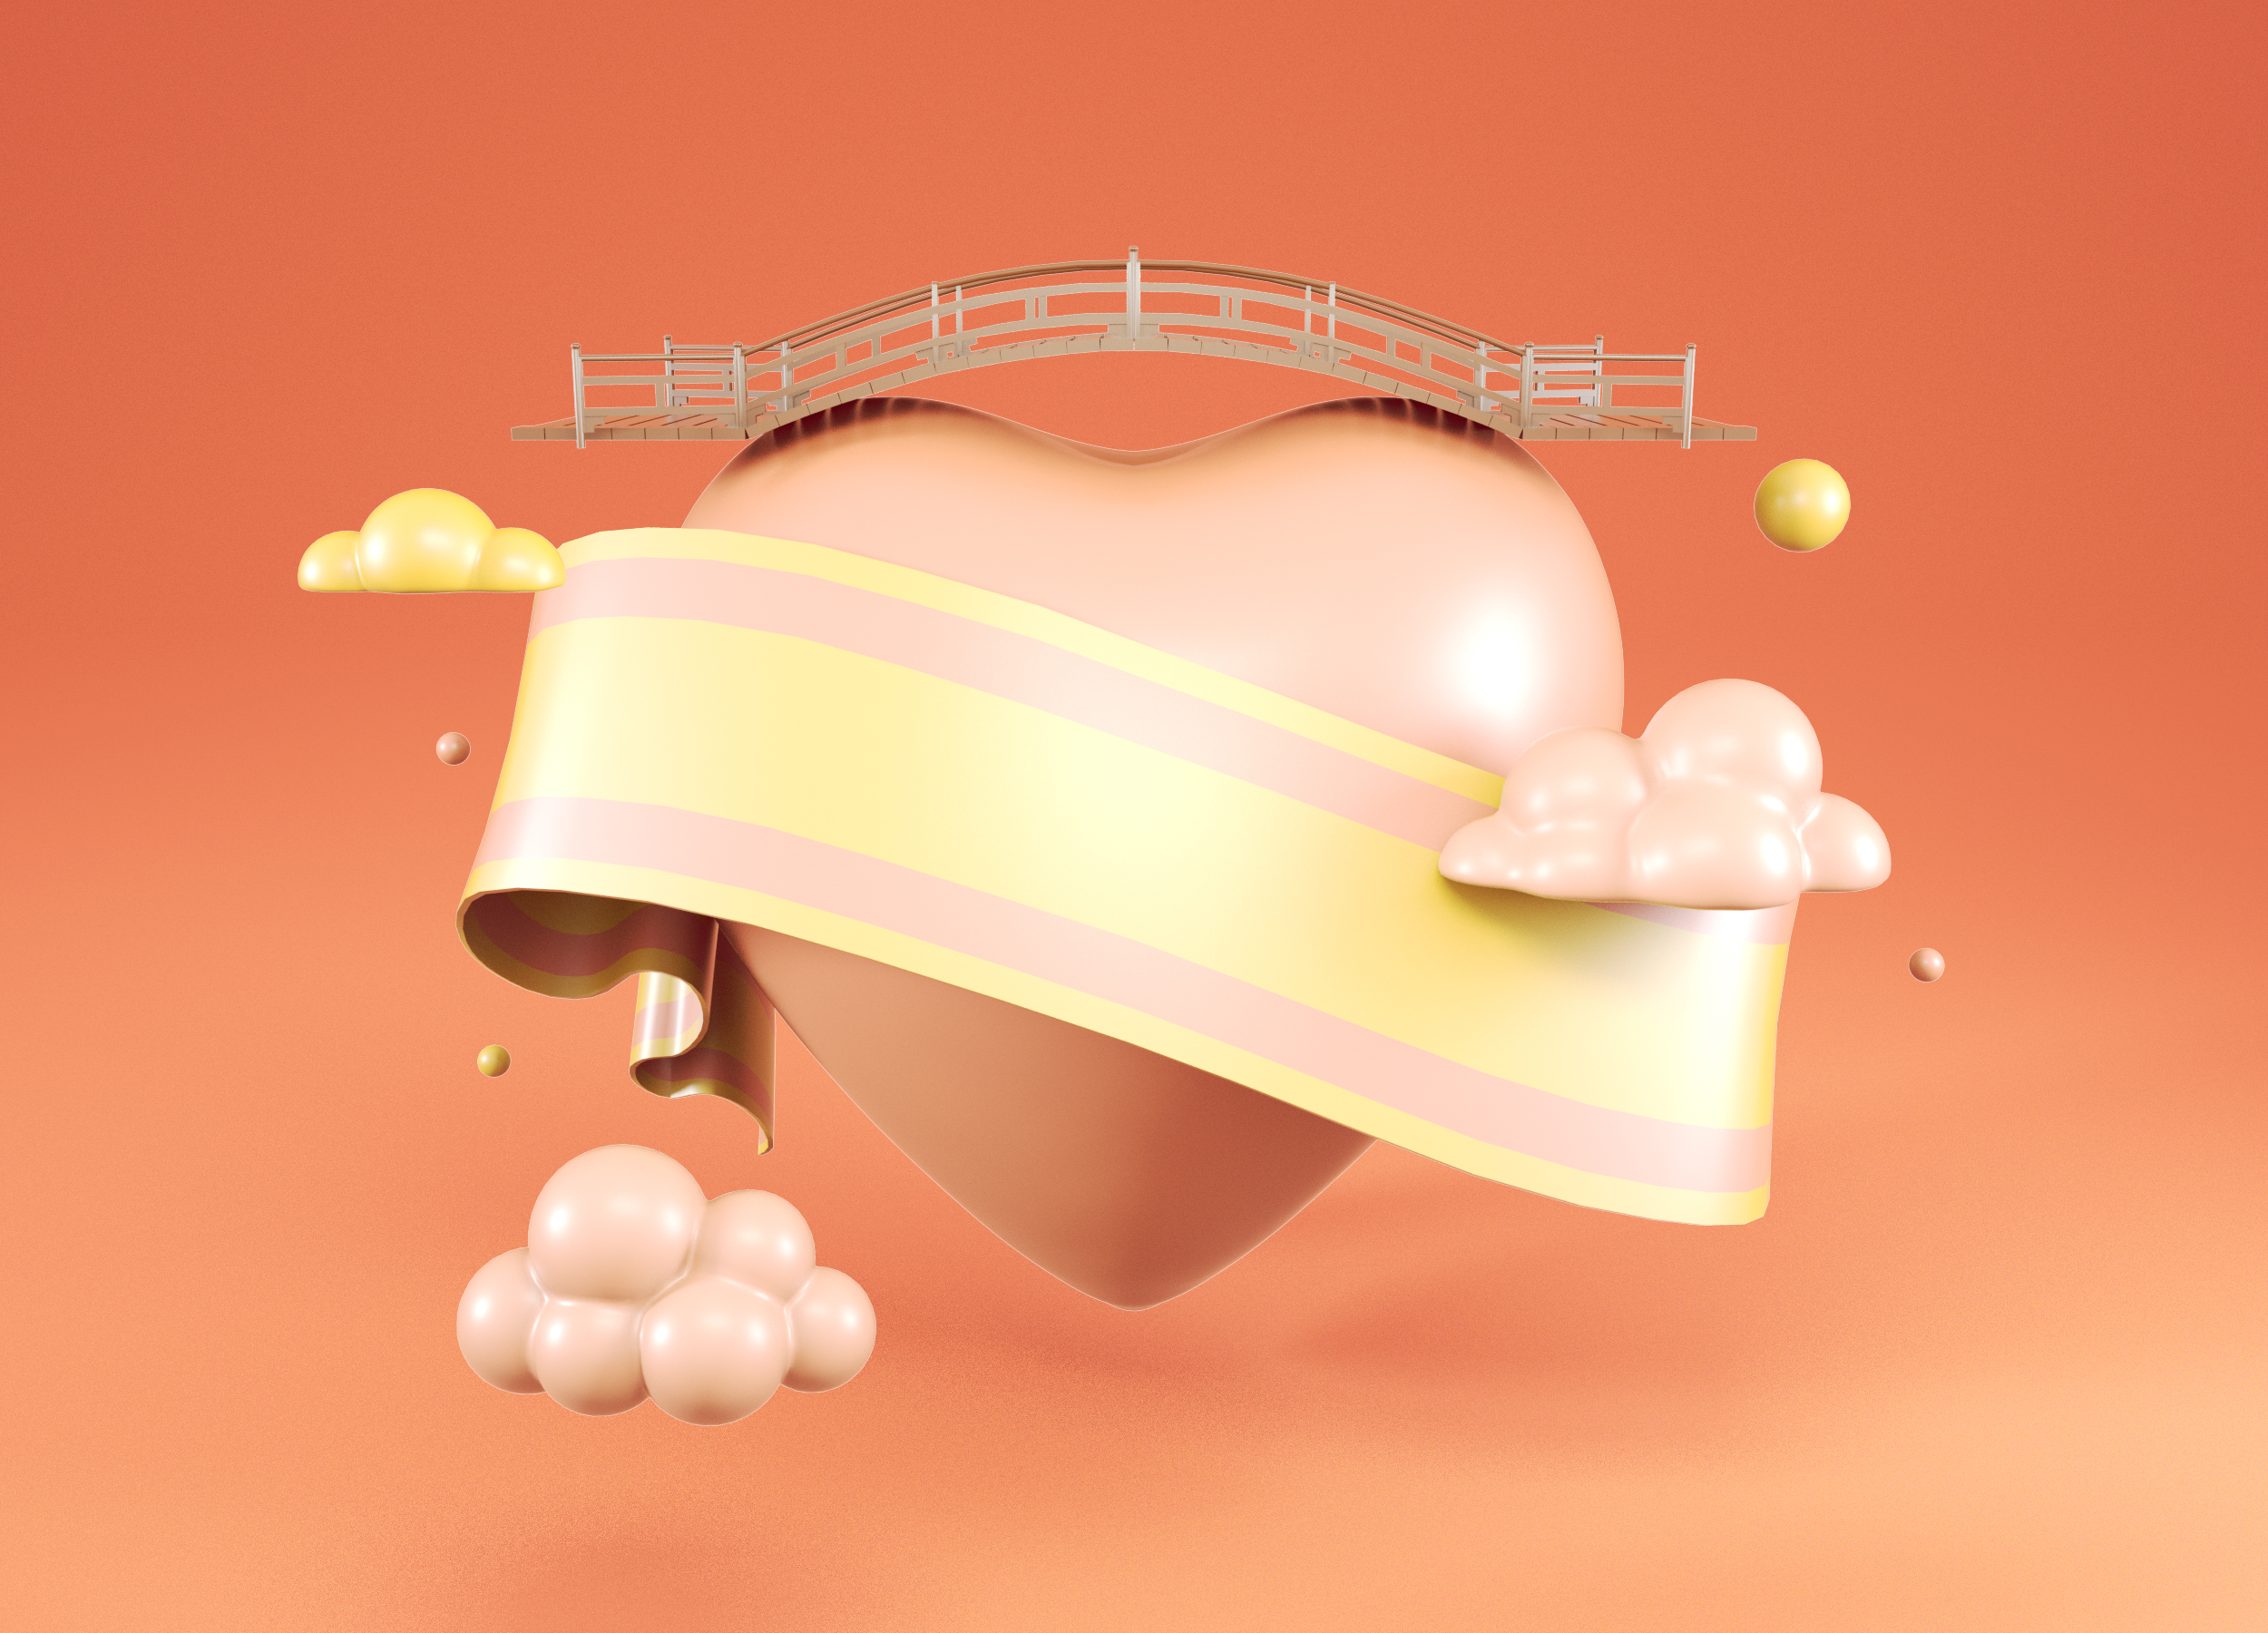 C4D装饰元素爱心桥梁云朵促销3d多彩C4D装饰元素爱心桥梁云朵促销3d多彩.jpg